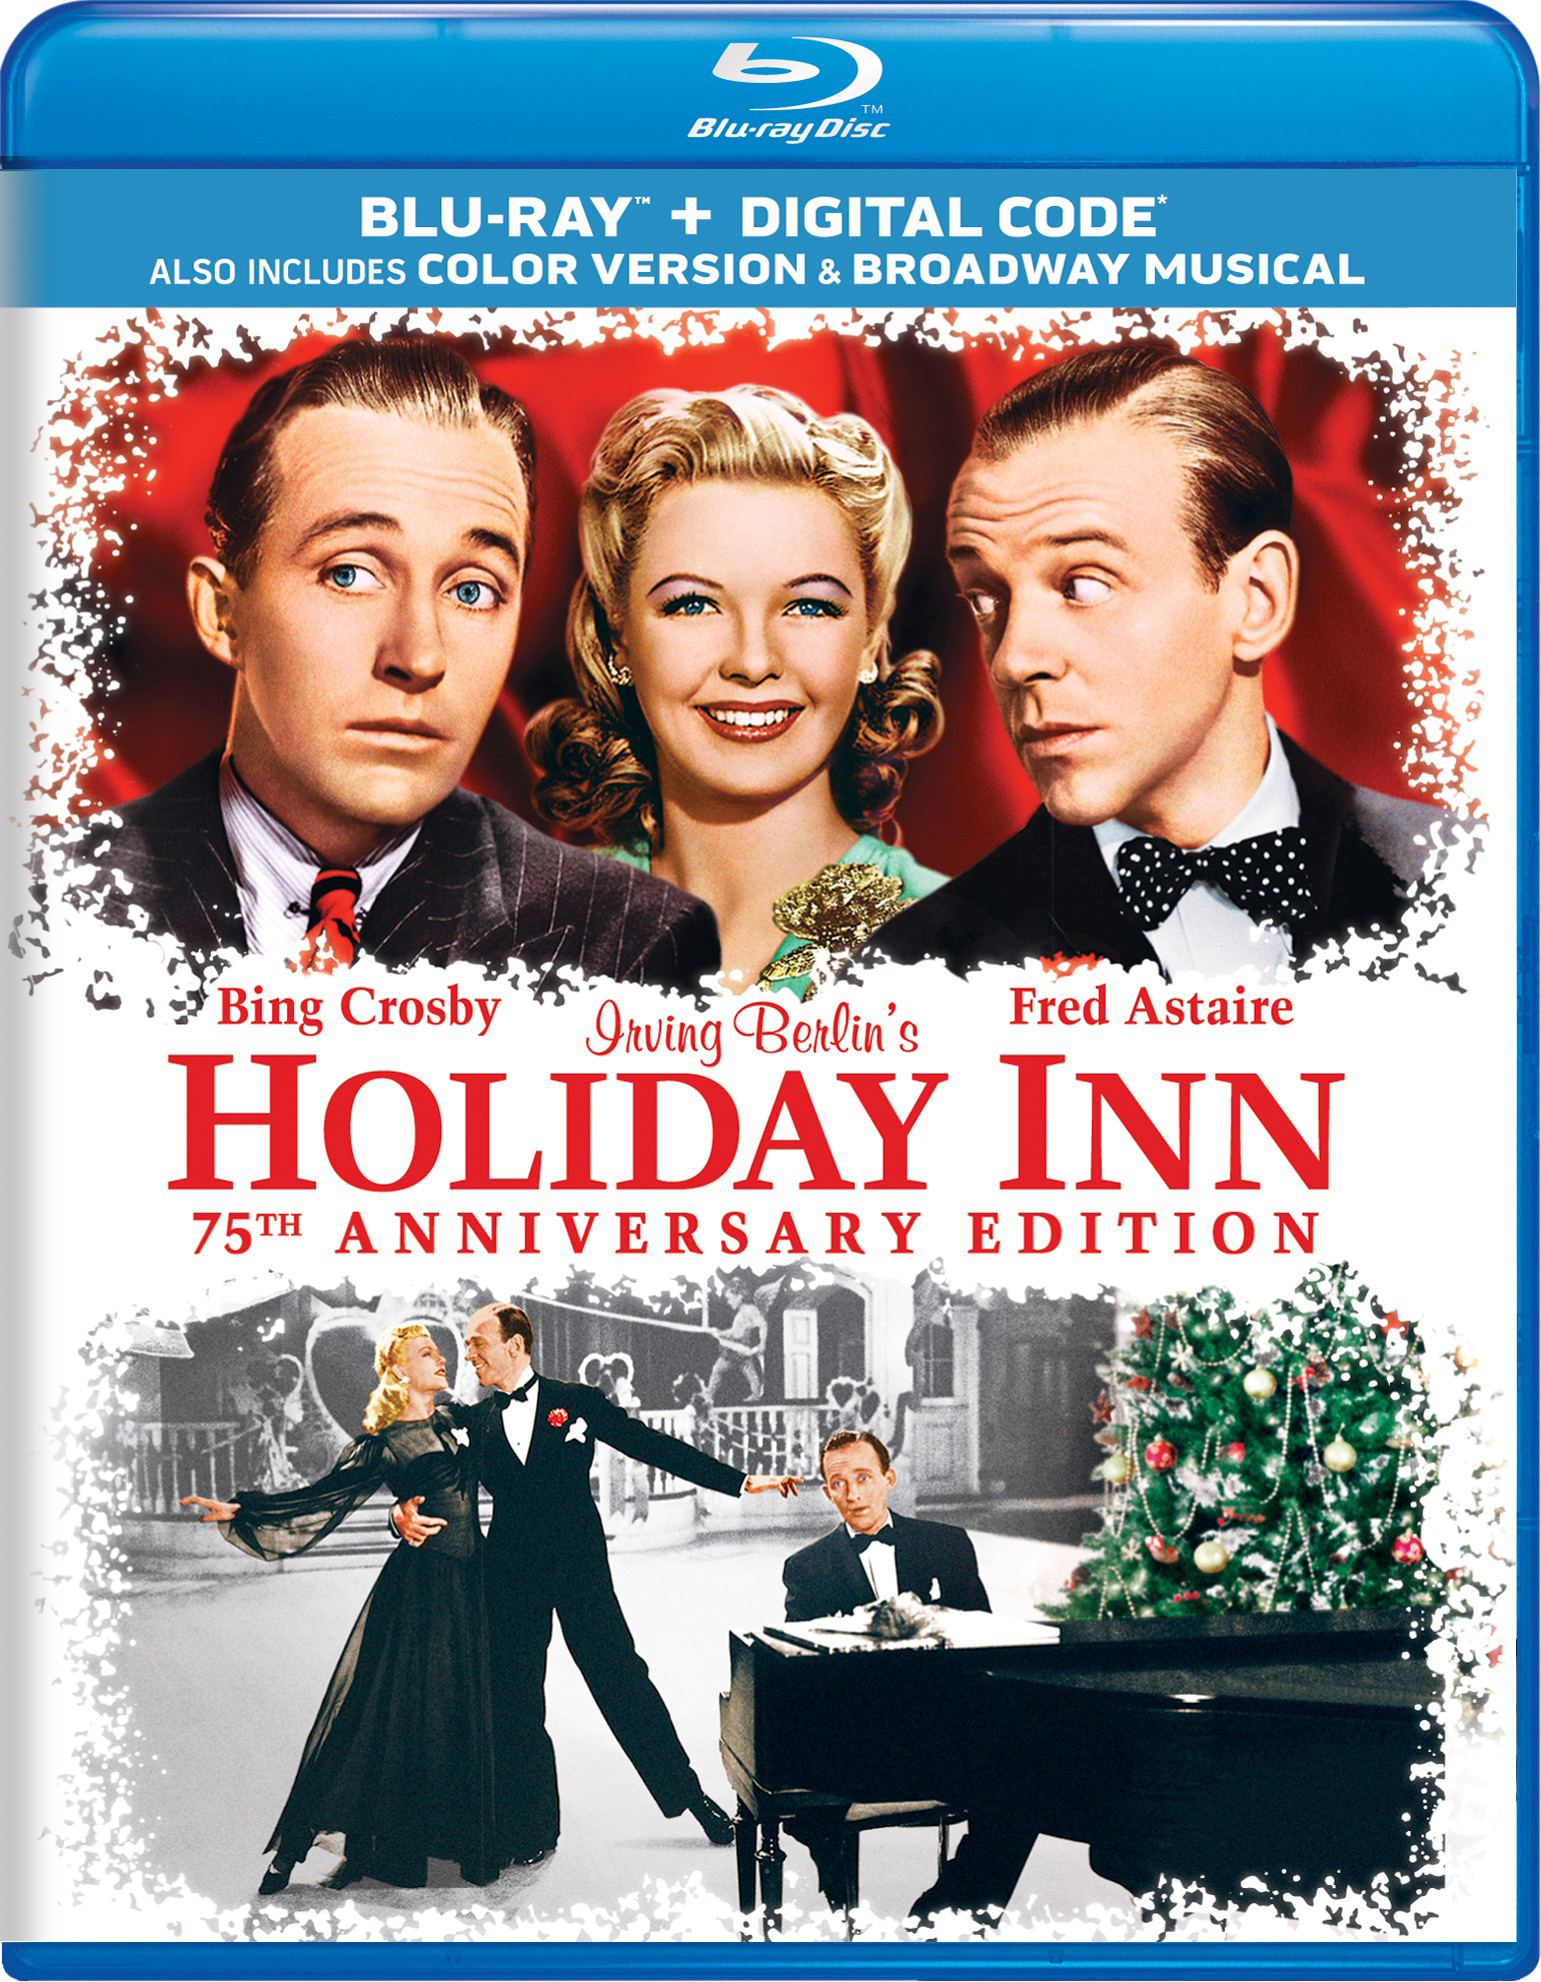 Holiday Inn (75th Anniversary Edition) - Blu-ray [ 1942 ] - Musical Movies on Blu-ray